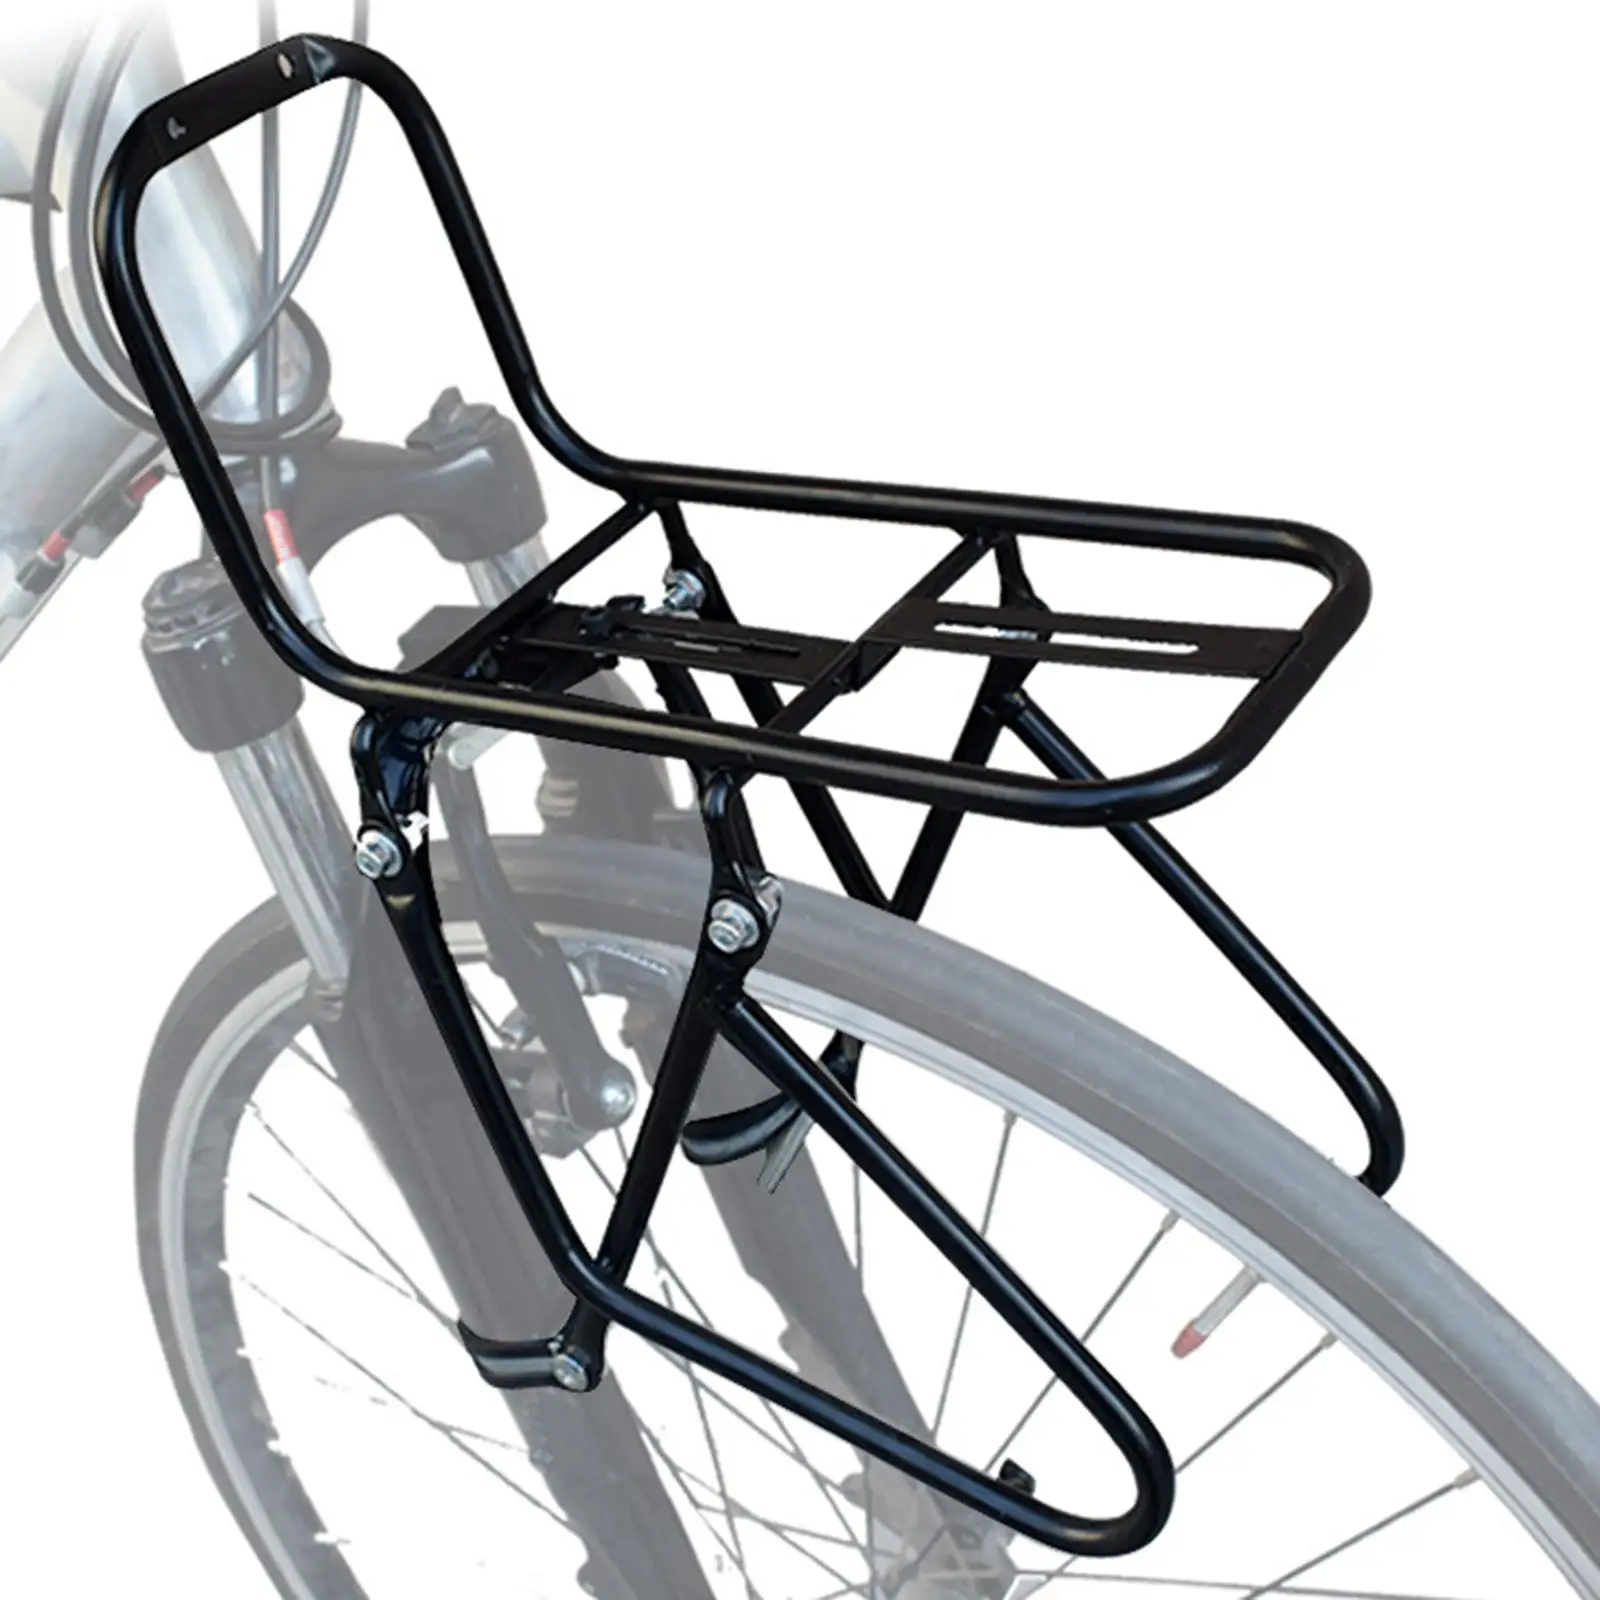 Steel Bike Front Rack Bicycle Carrier Basket Cycling Bracket Luggage Shelf Practical Sturdy Cargo Rack Holder Carrier for Biking